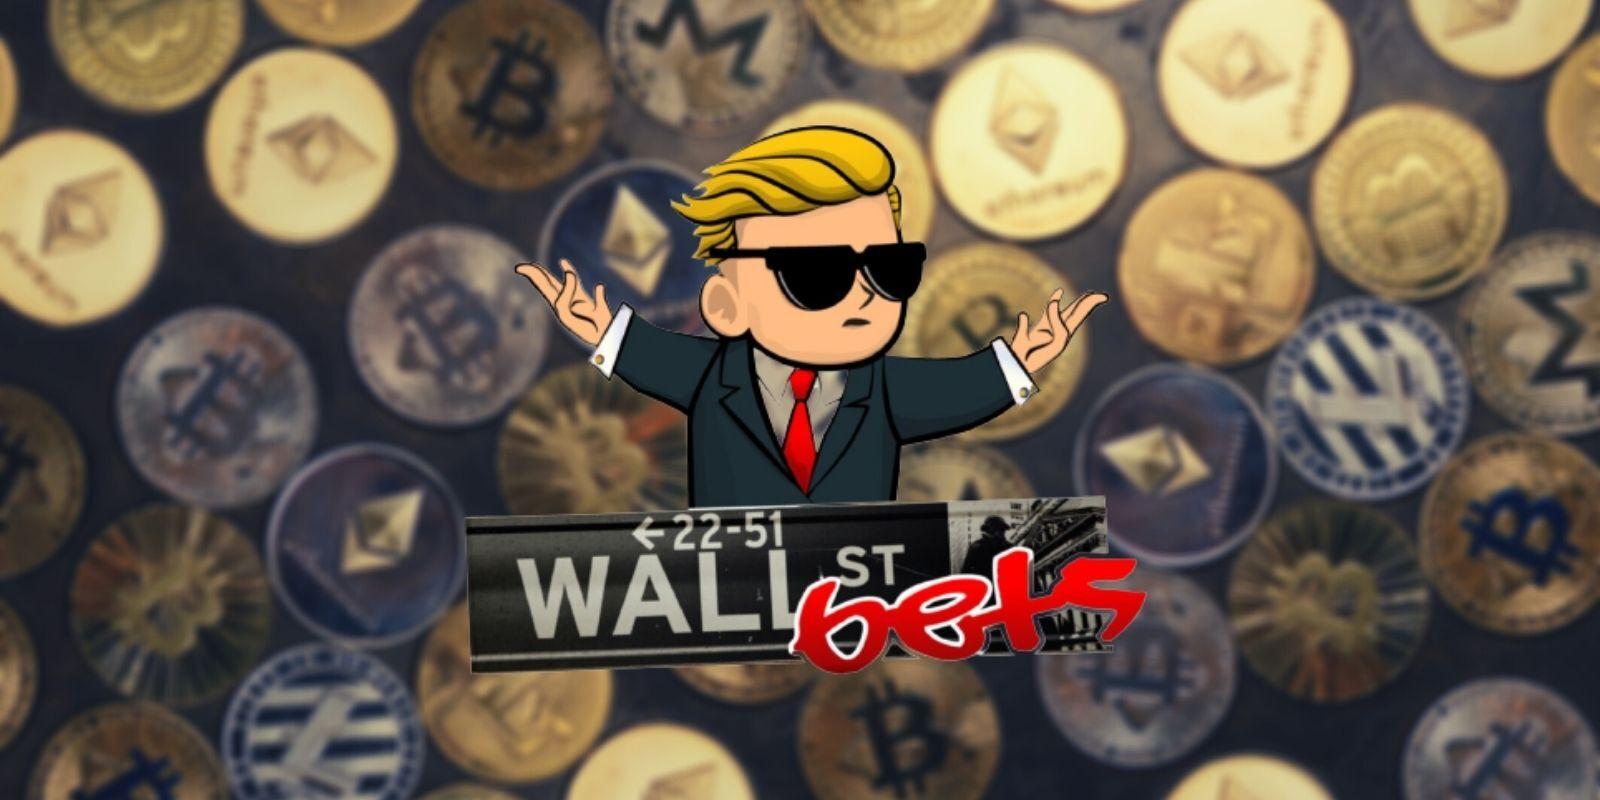 wallstreetbets-ra-mat-san-pham-ho-tro-giao-dich-chung-khoan-moi-xay-dung-tren-mang-bitcoin